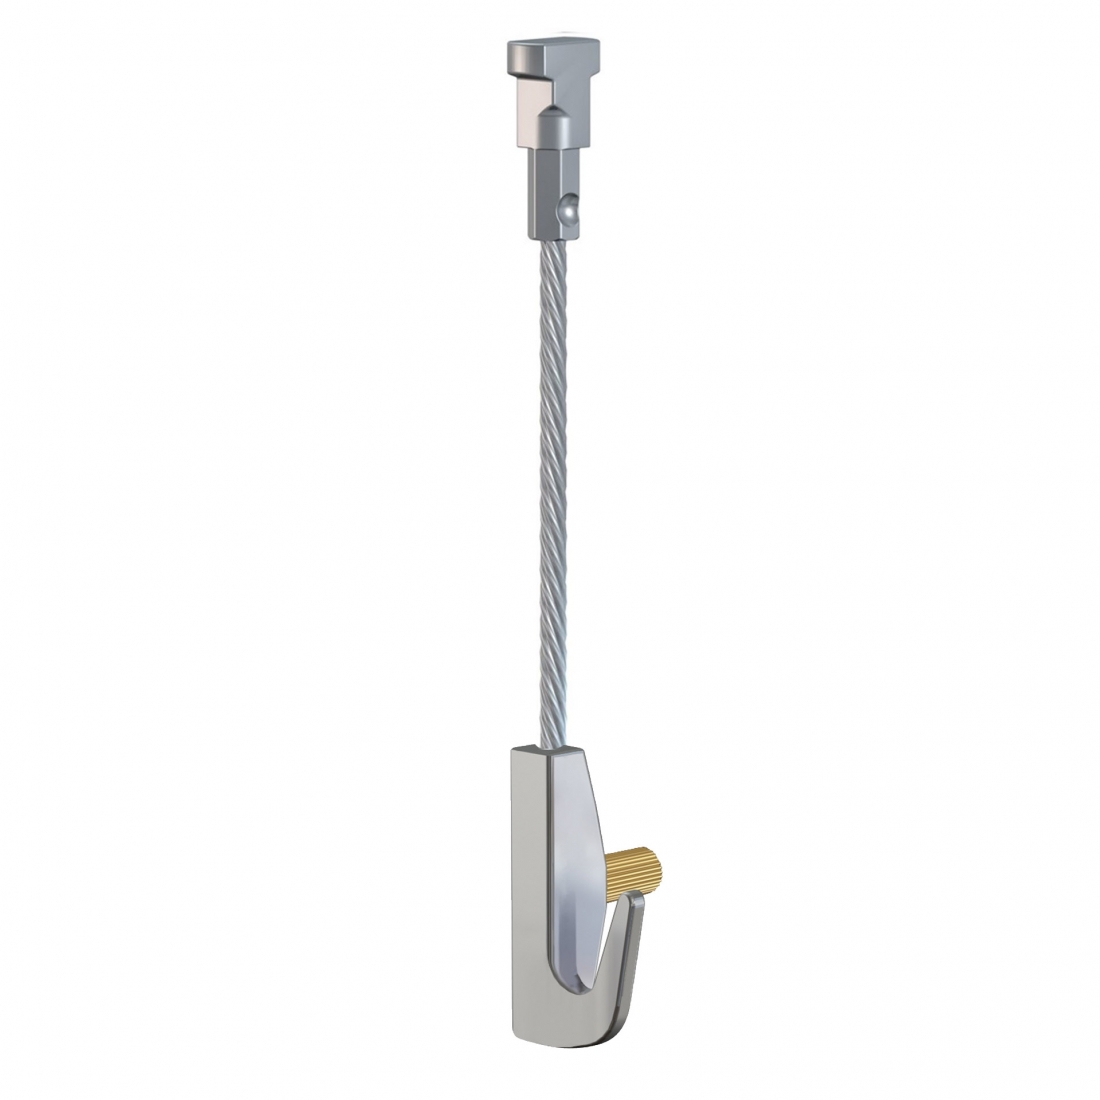 KIT CABLE de ACERO con gancho colgador para guia para colgar cuadros artiteq, modelo TWISTER de 7 KG